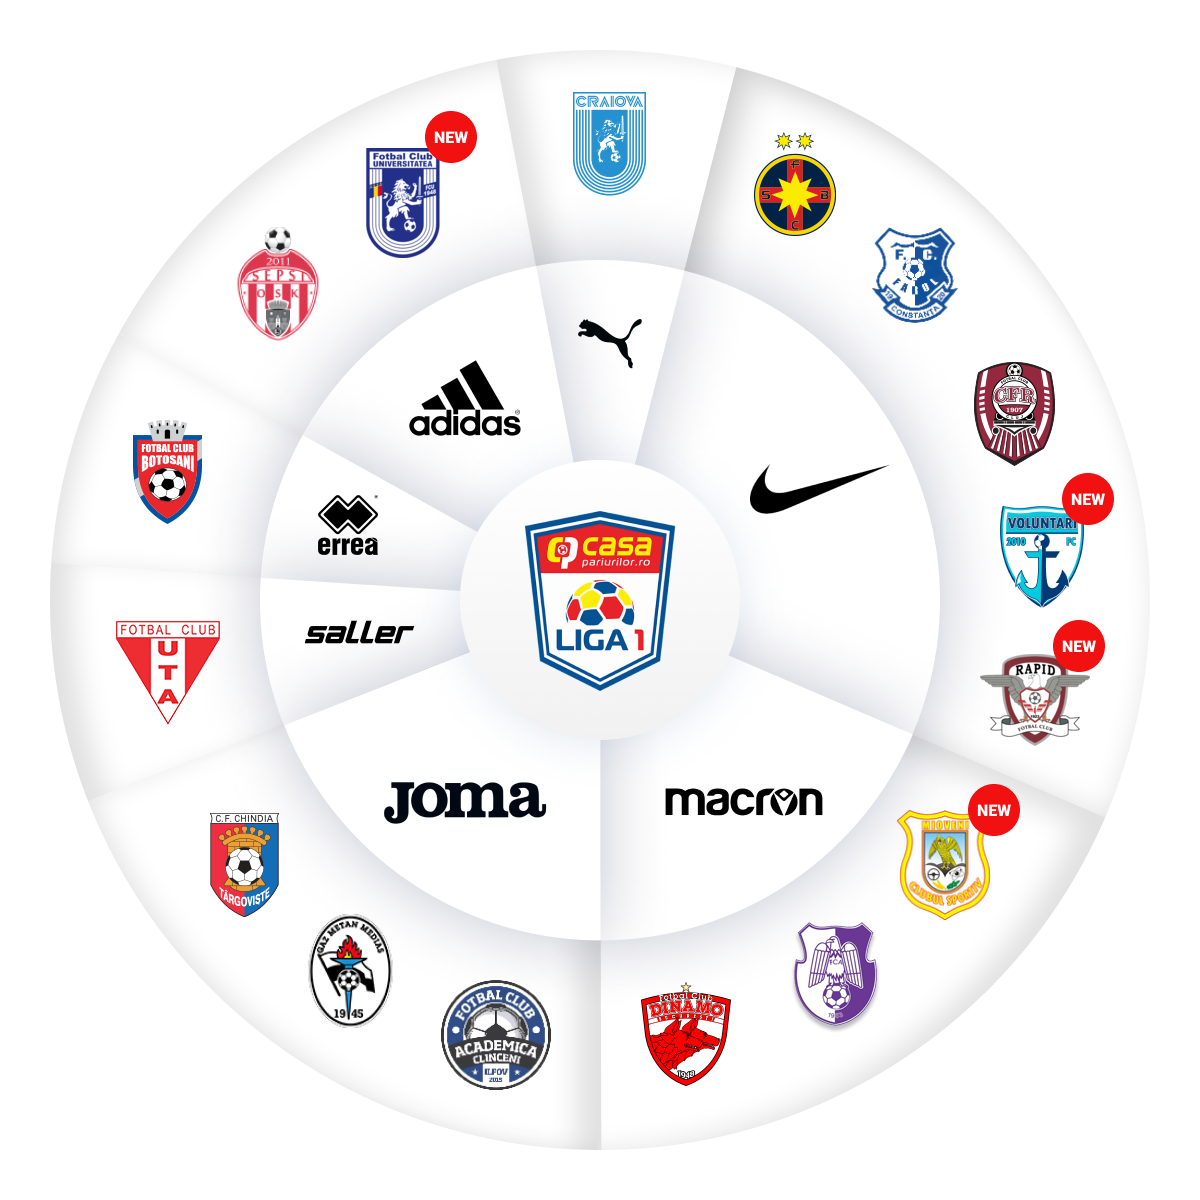 Overview of the 2021/2022 La Liga sponsors